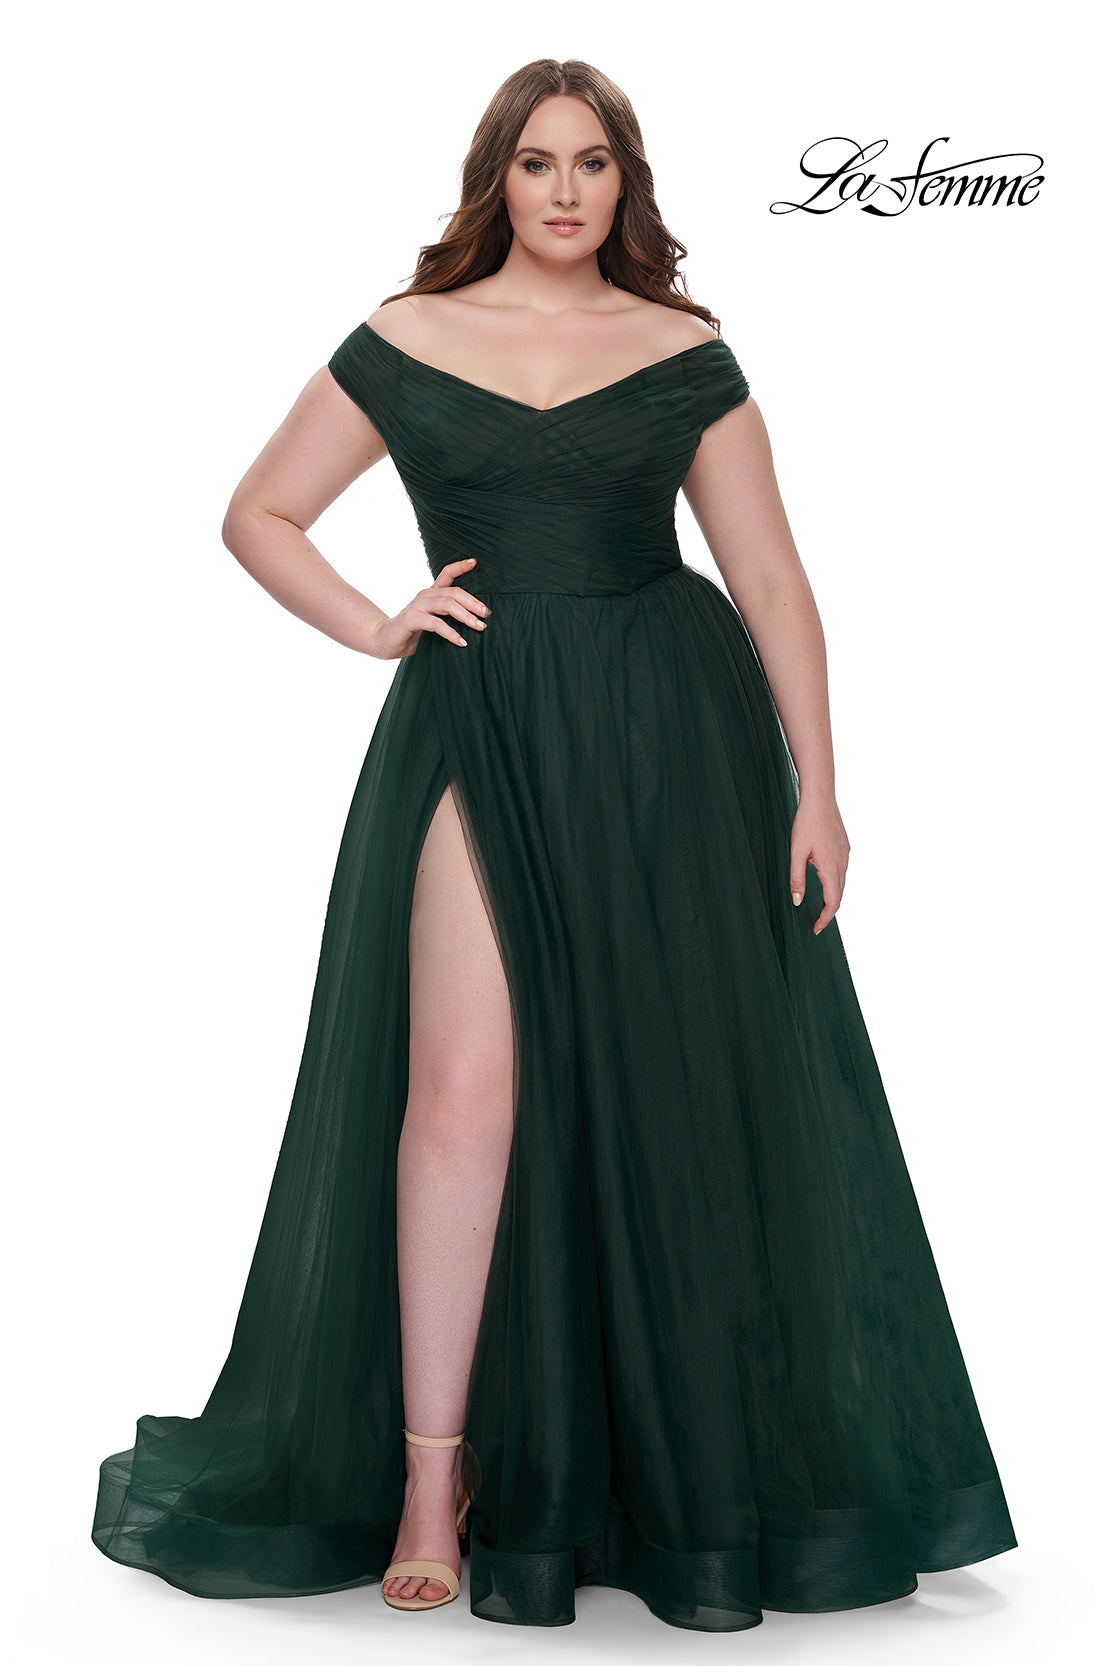 La-Femme-32204-V-Neck-Neckline-Zipper-Back-Ruched-Tulle-A-Line-Dark-Emerald-Evening-Dress-B-Chic-Fashions-Prom-Dress